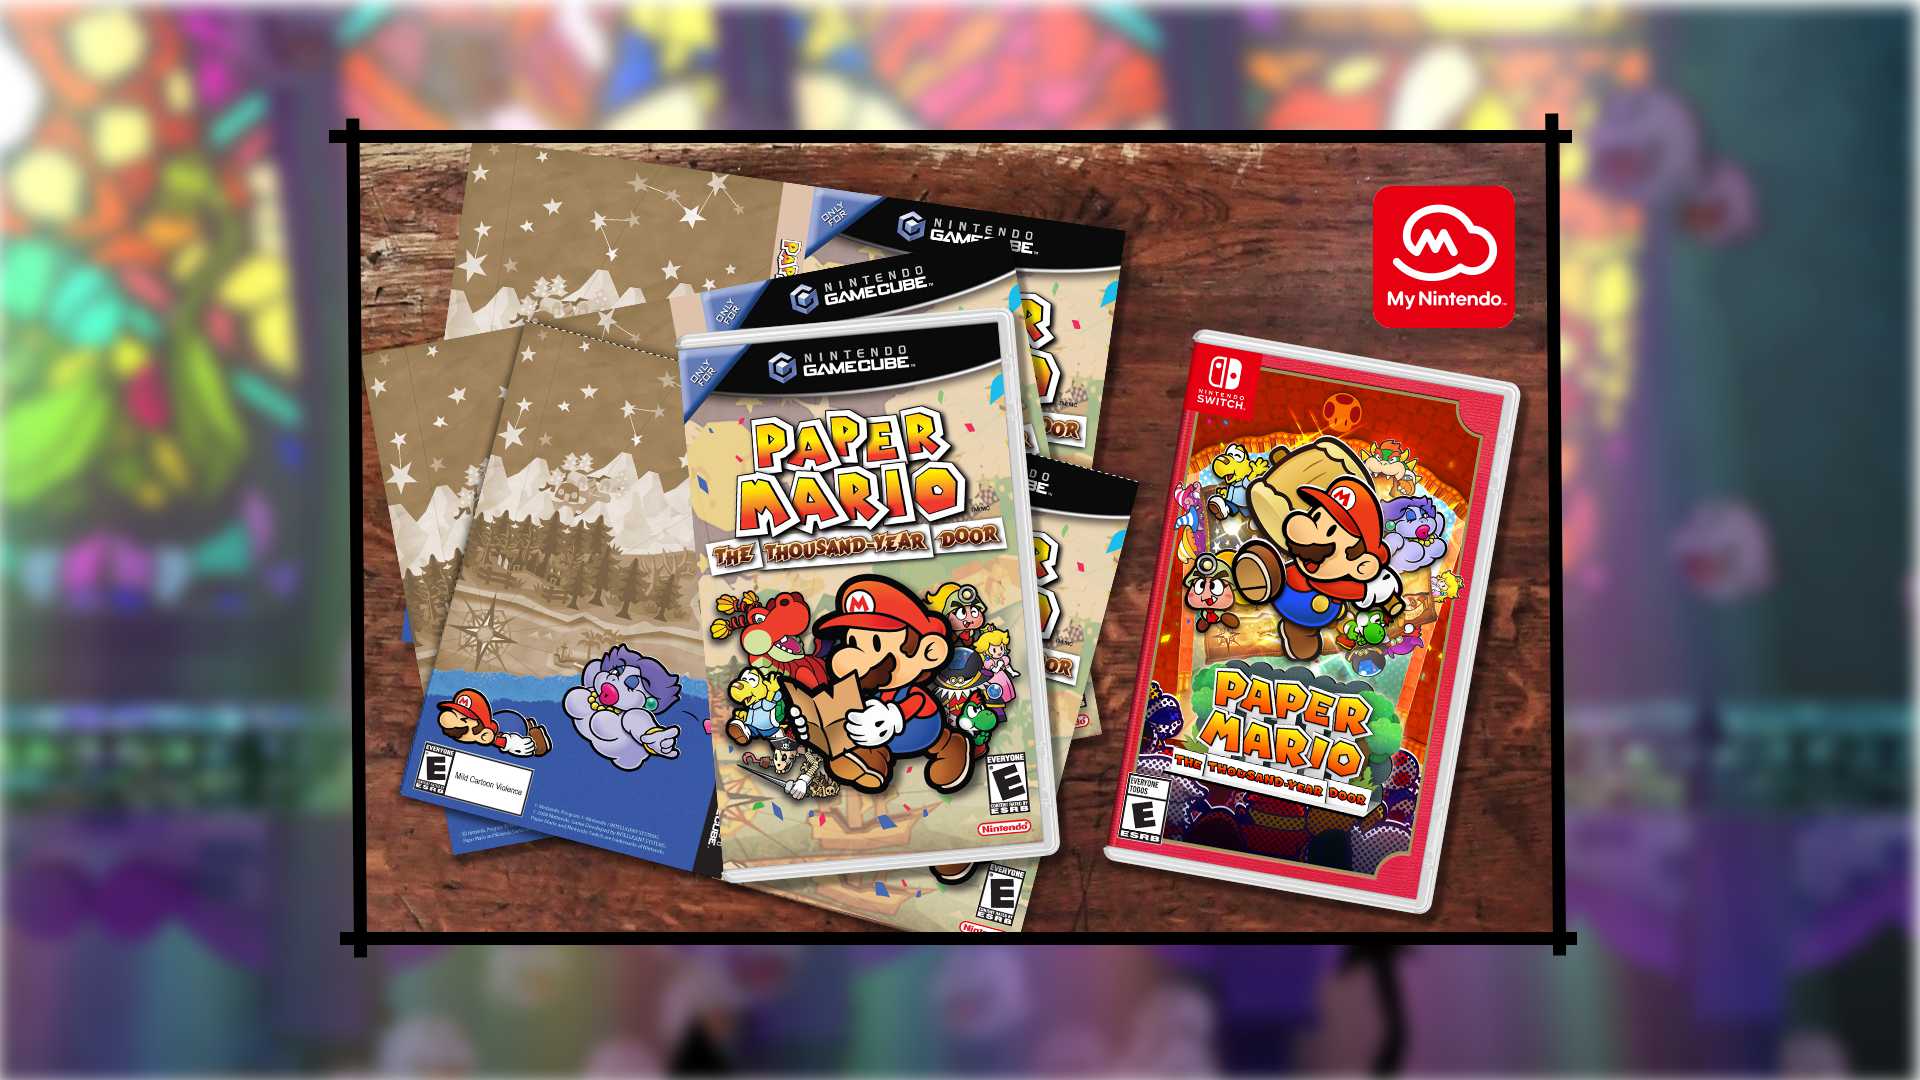 Nintendo: Alternatives Paper Mario-Cover bringt Retro-Feeling zurück